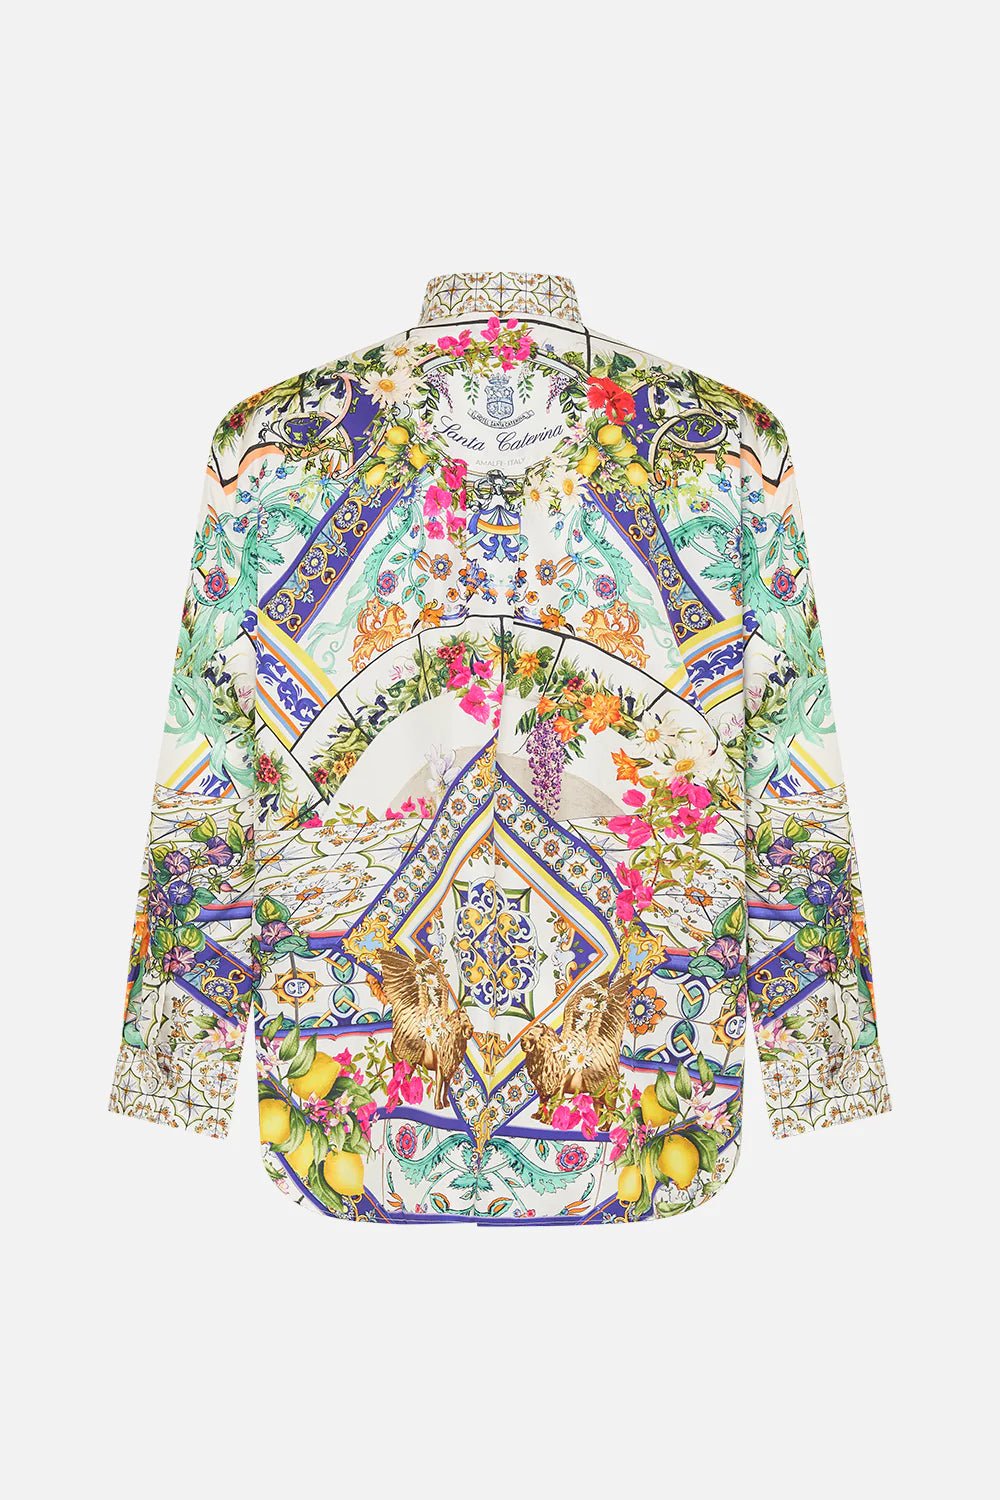 CAMILLA Mens Oversized Shirt Amalfi Amore - Camilla - Pinkhill - darwin fashion - darwin boutique